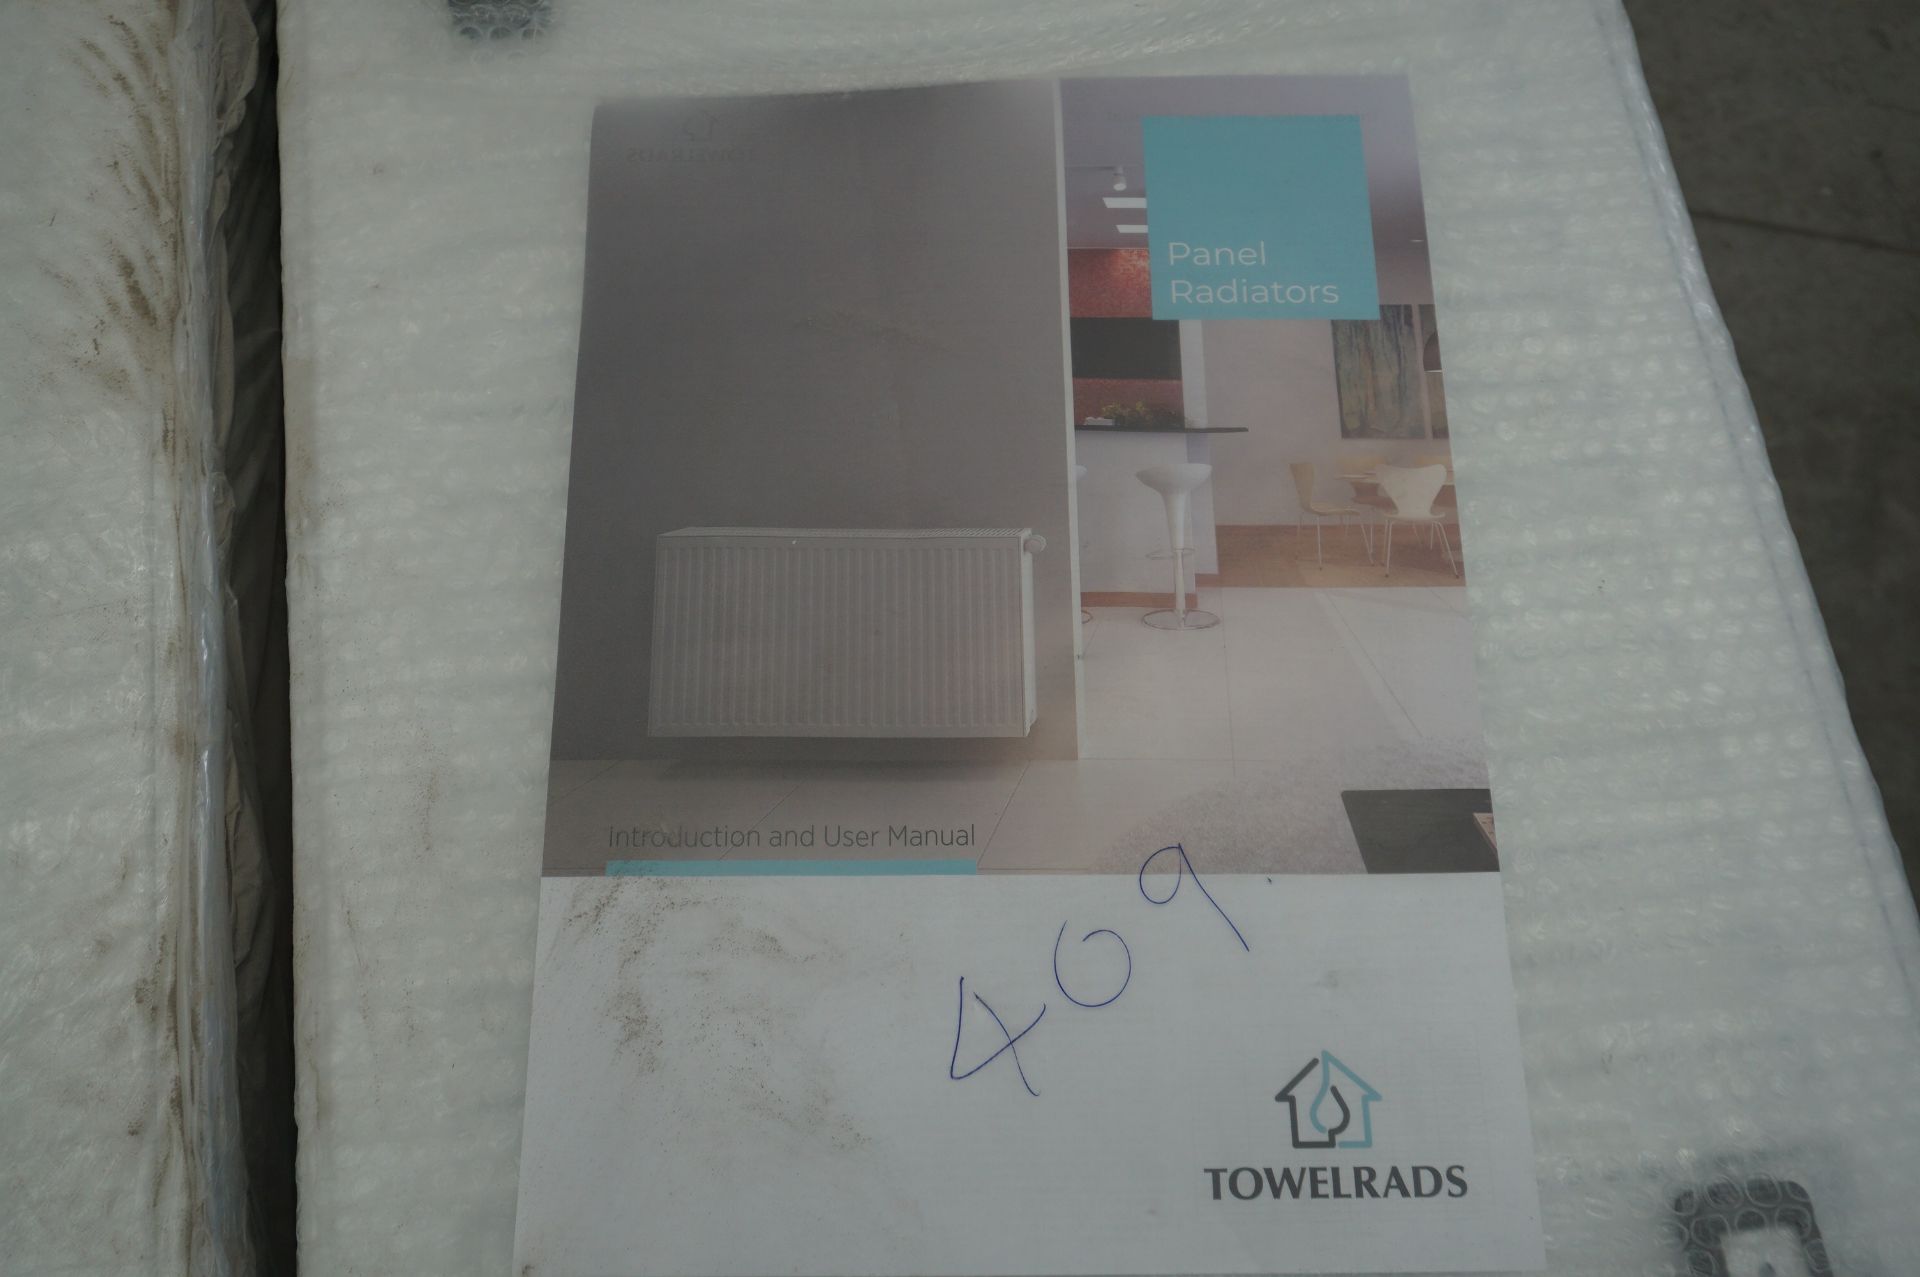 8x (no.) Towelrads, Compact T22 500 x 800mm white panel radiators, Part No. 2250080LN0113 - Image 3 of 4